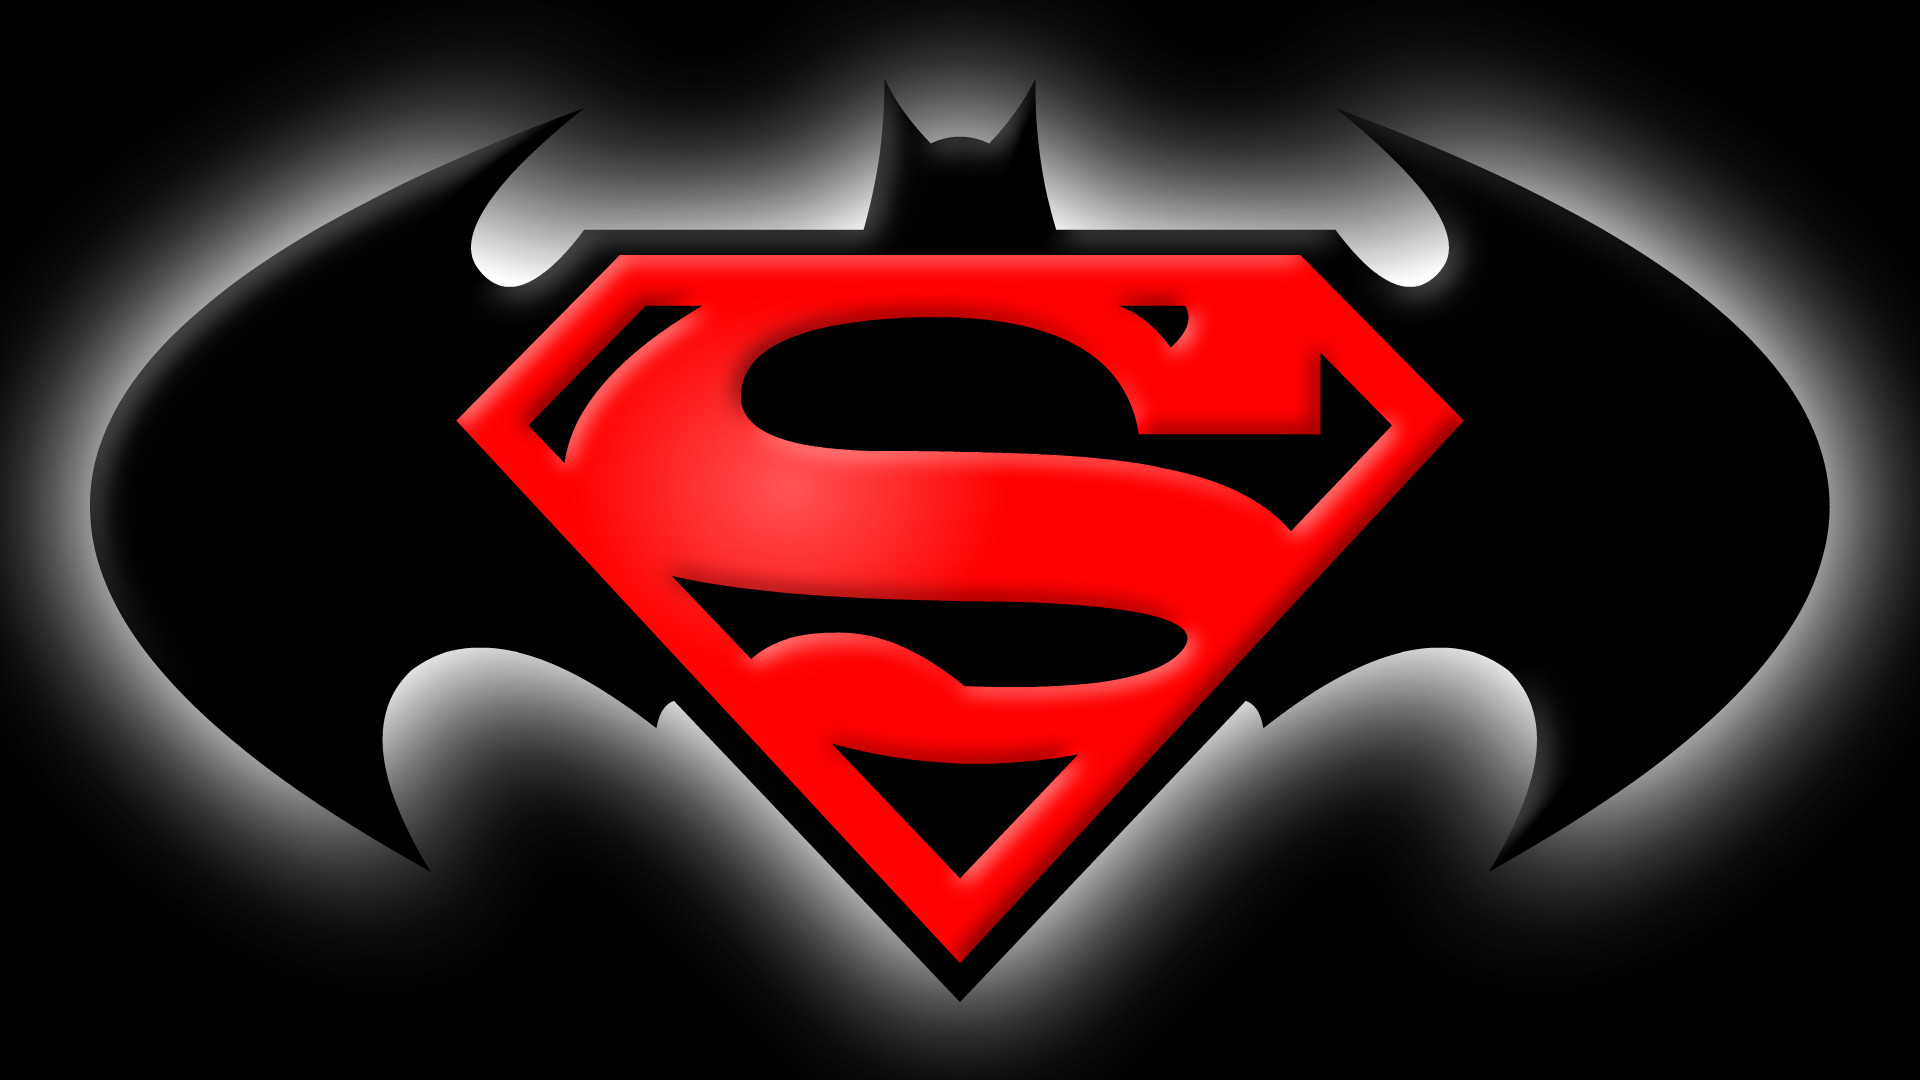 Superman/Batman Symbol by Yurtigo on Clipart library